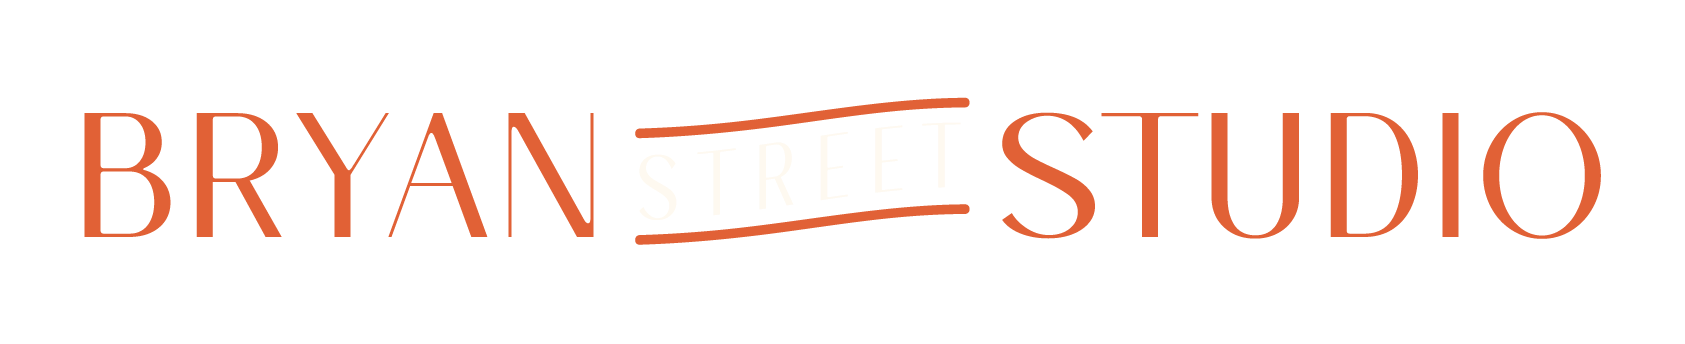 Bryan Street Studio